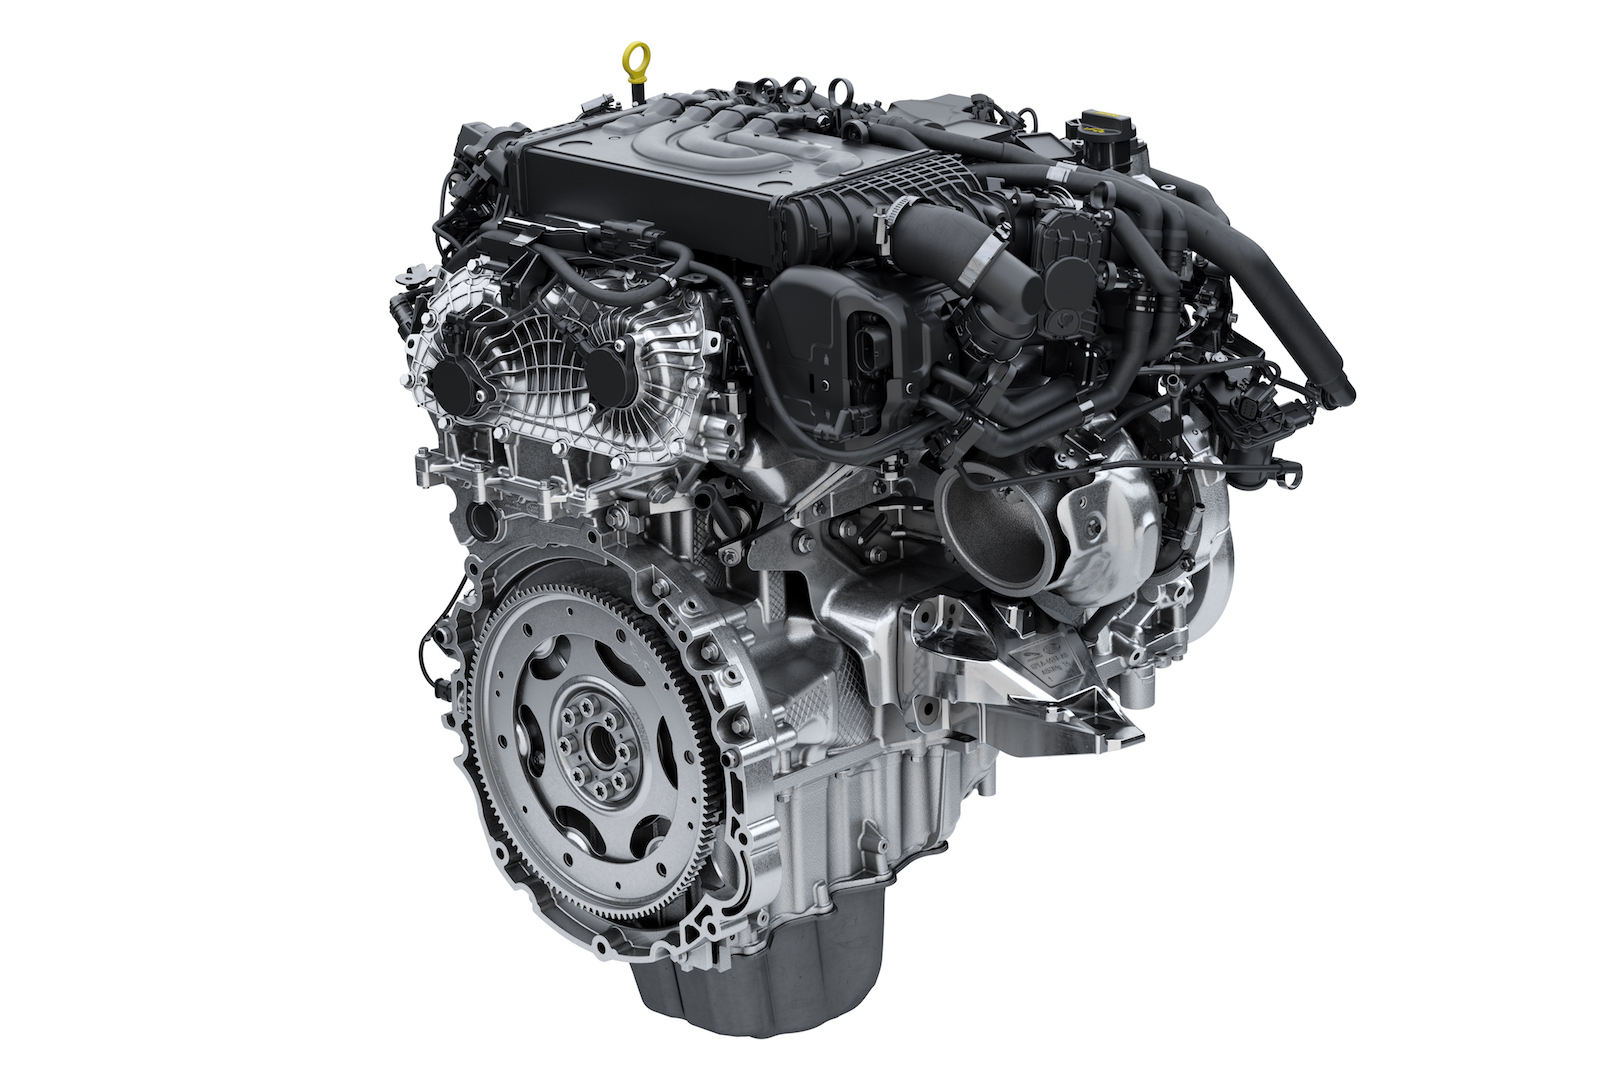 Jaguar Land Rover reveals new inline-6, replaces V6